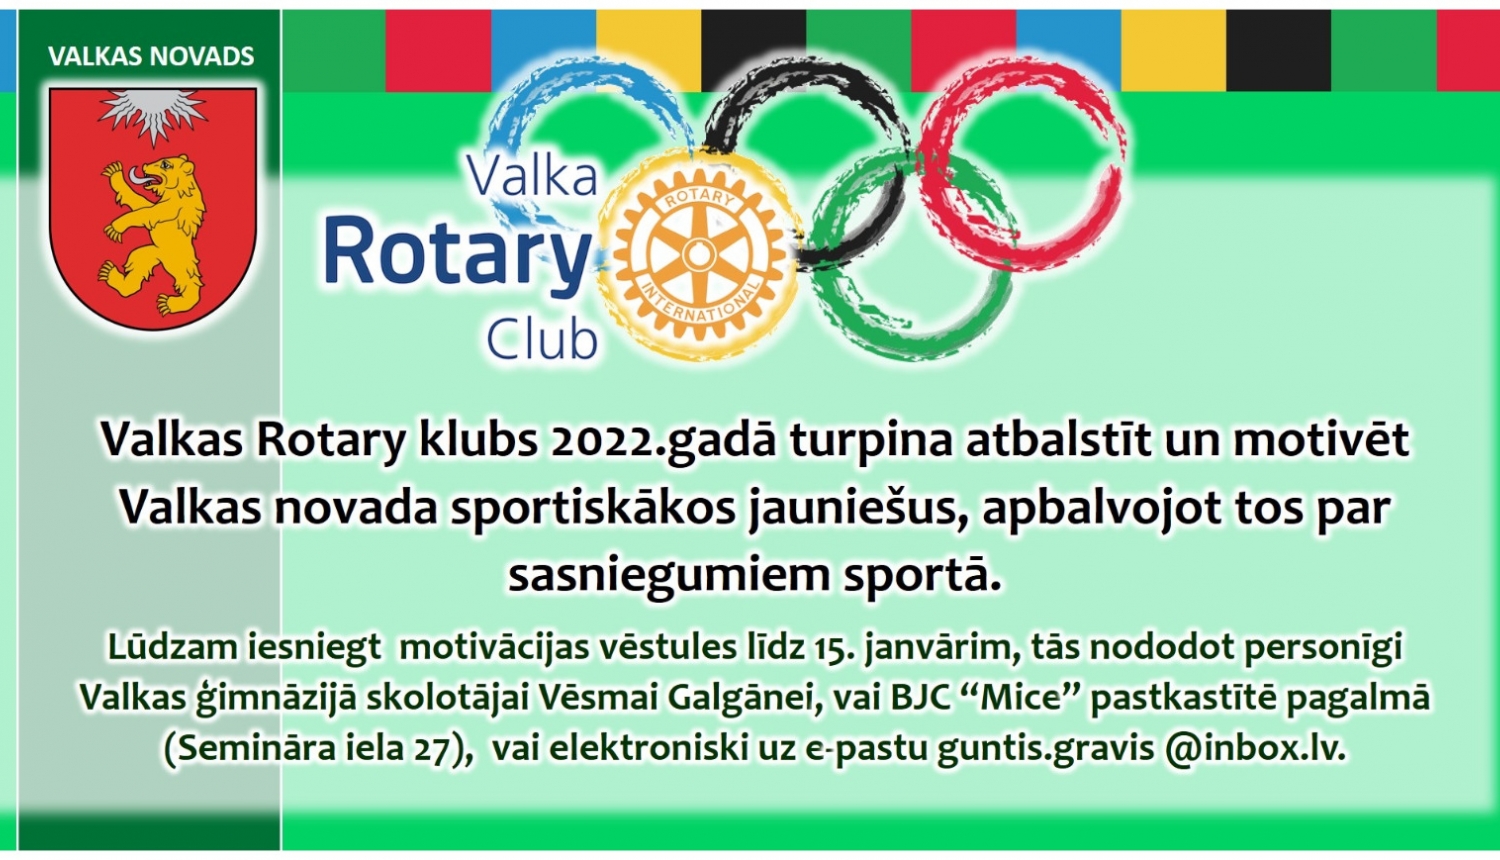 Valka Rotary klubs turpina atbalstīt un motivēt sportistus